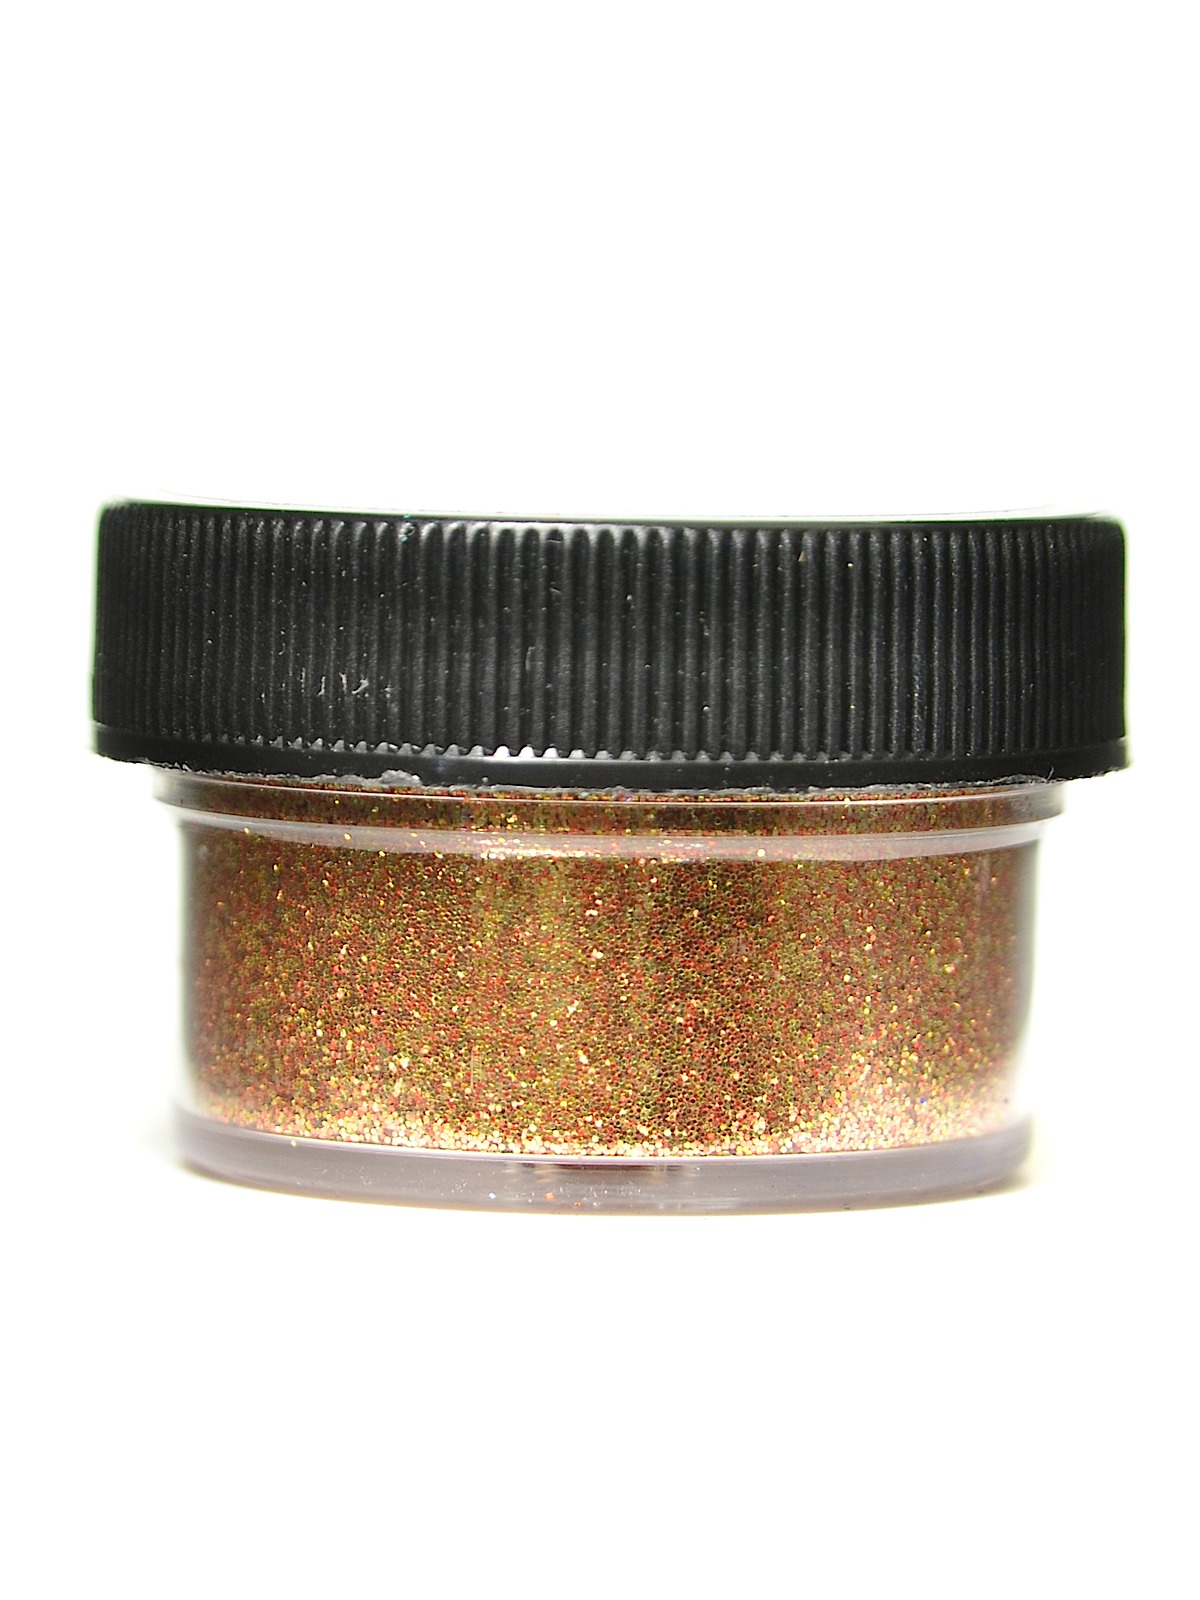 Ultrafine Opaque Glitter Egyptian Gold 1 2 Oz. Jar